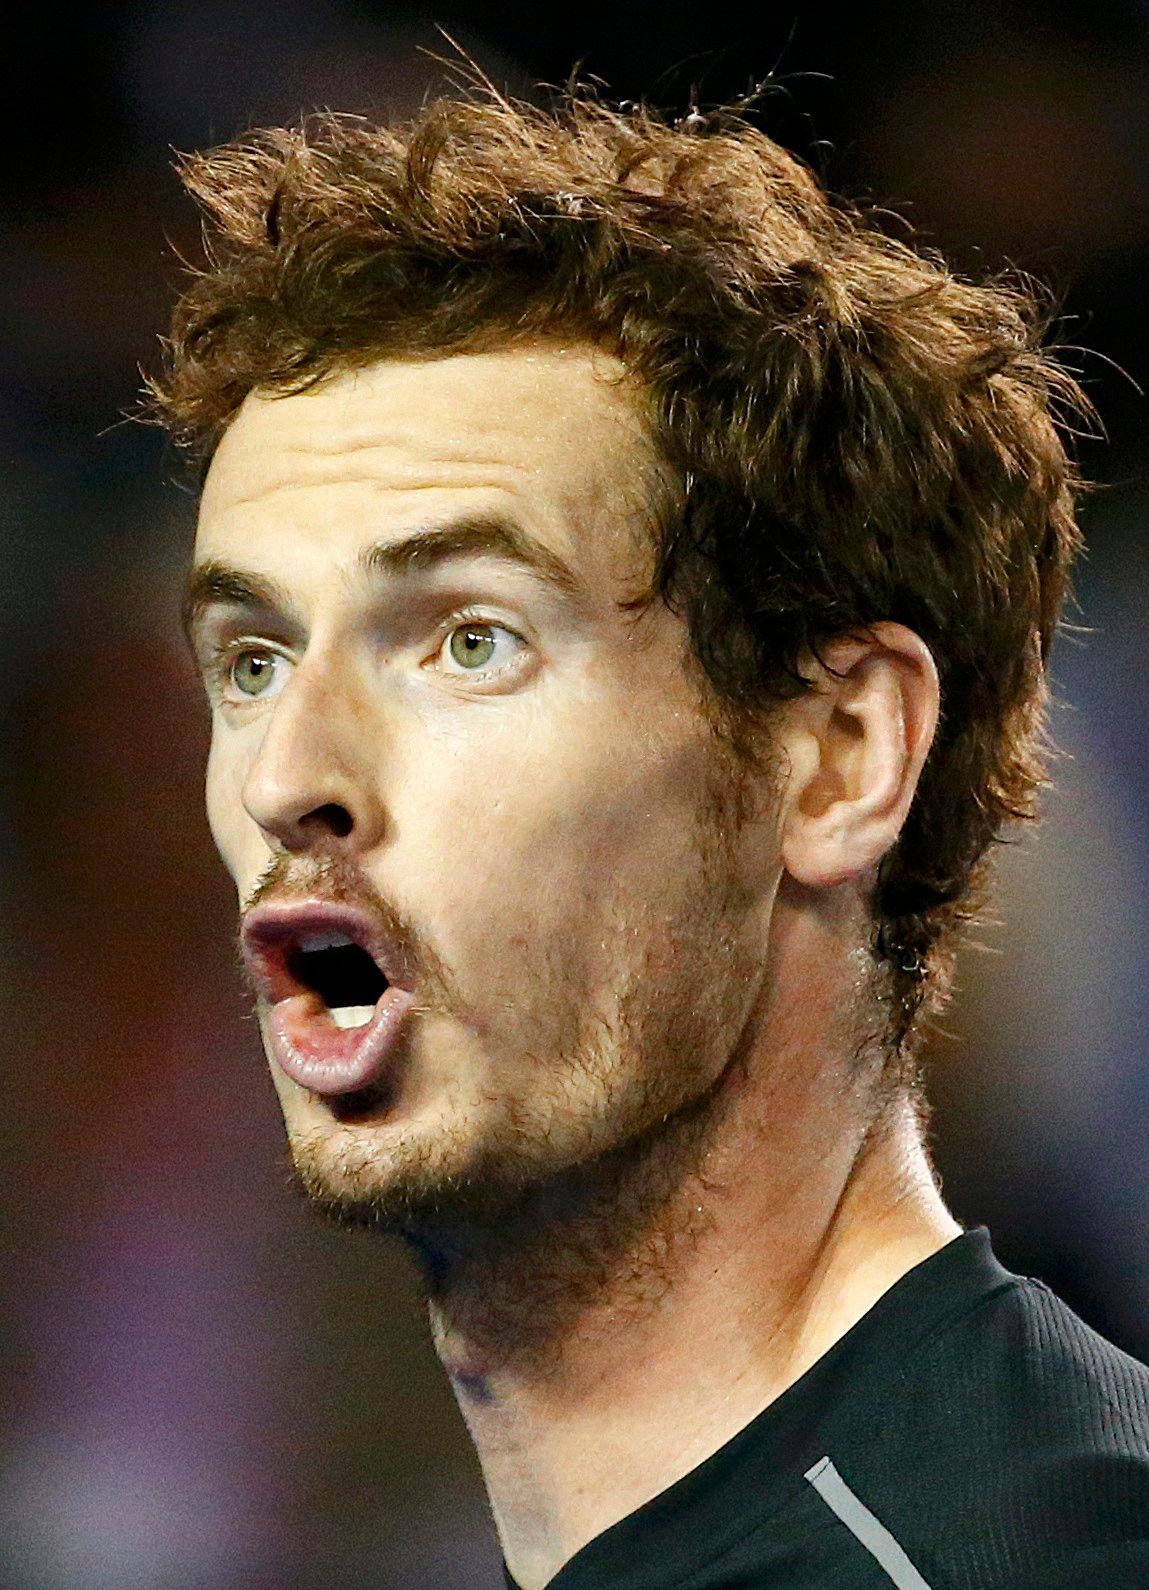 Andy Murray ve finále Australian Open 2016